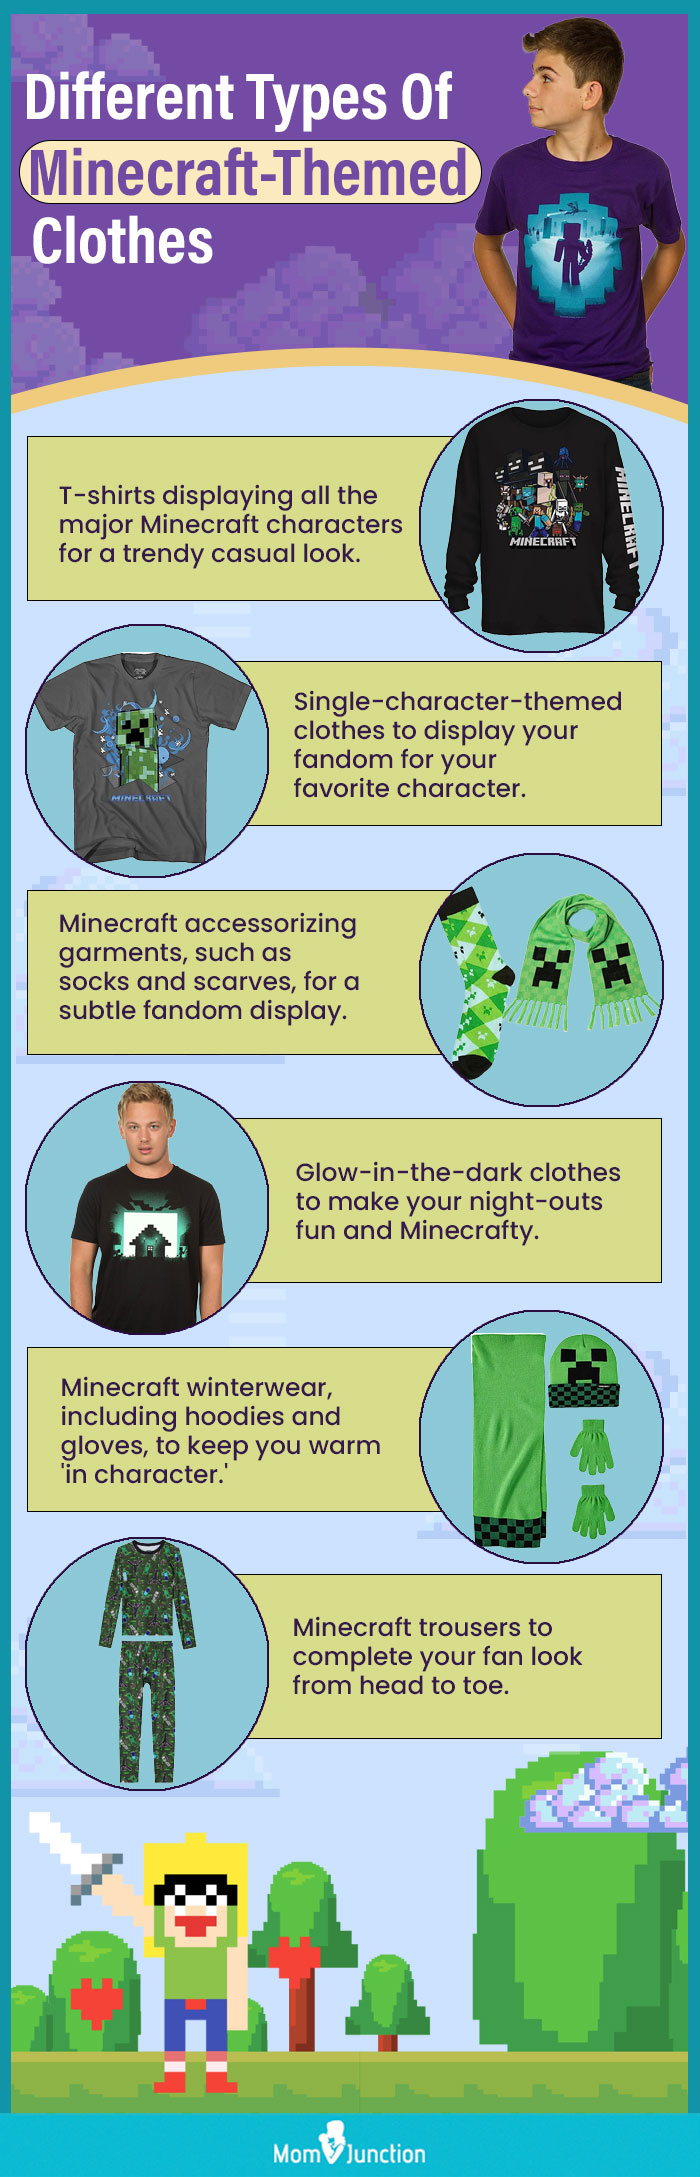 Minecraft Ender Dragon The End Adult Short Sleeve T-Shirt